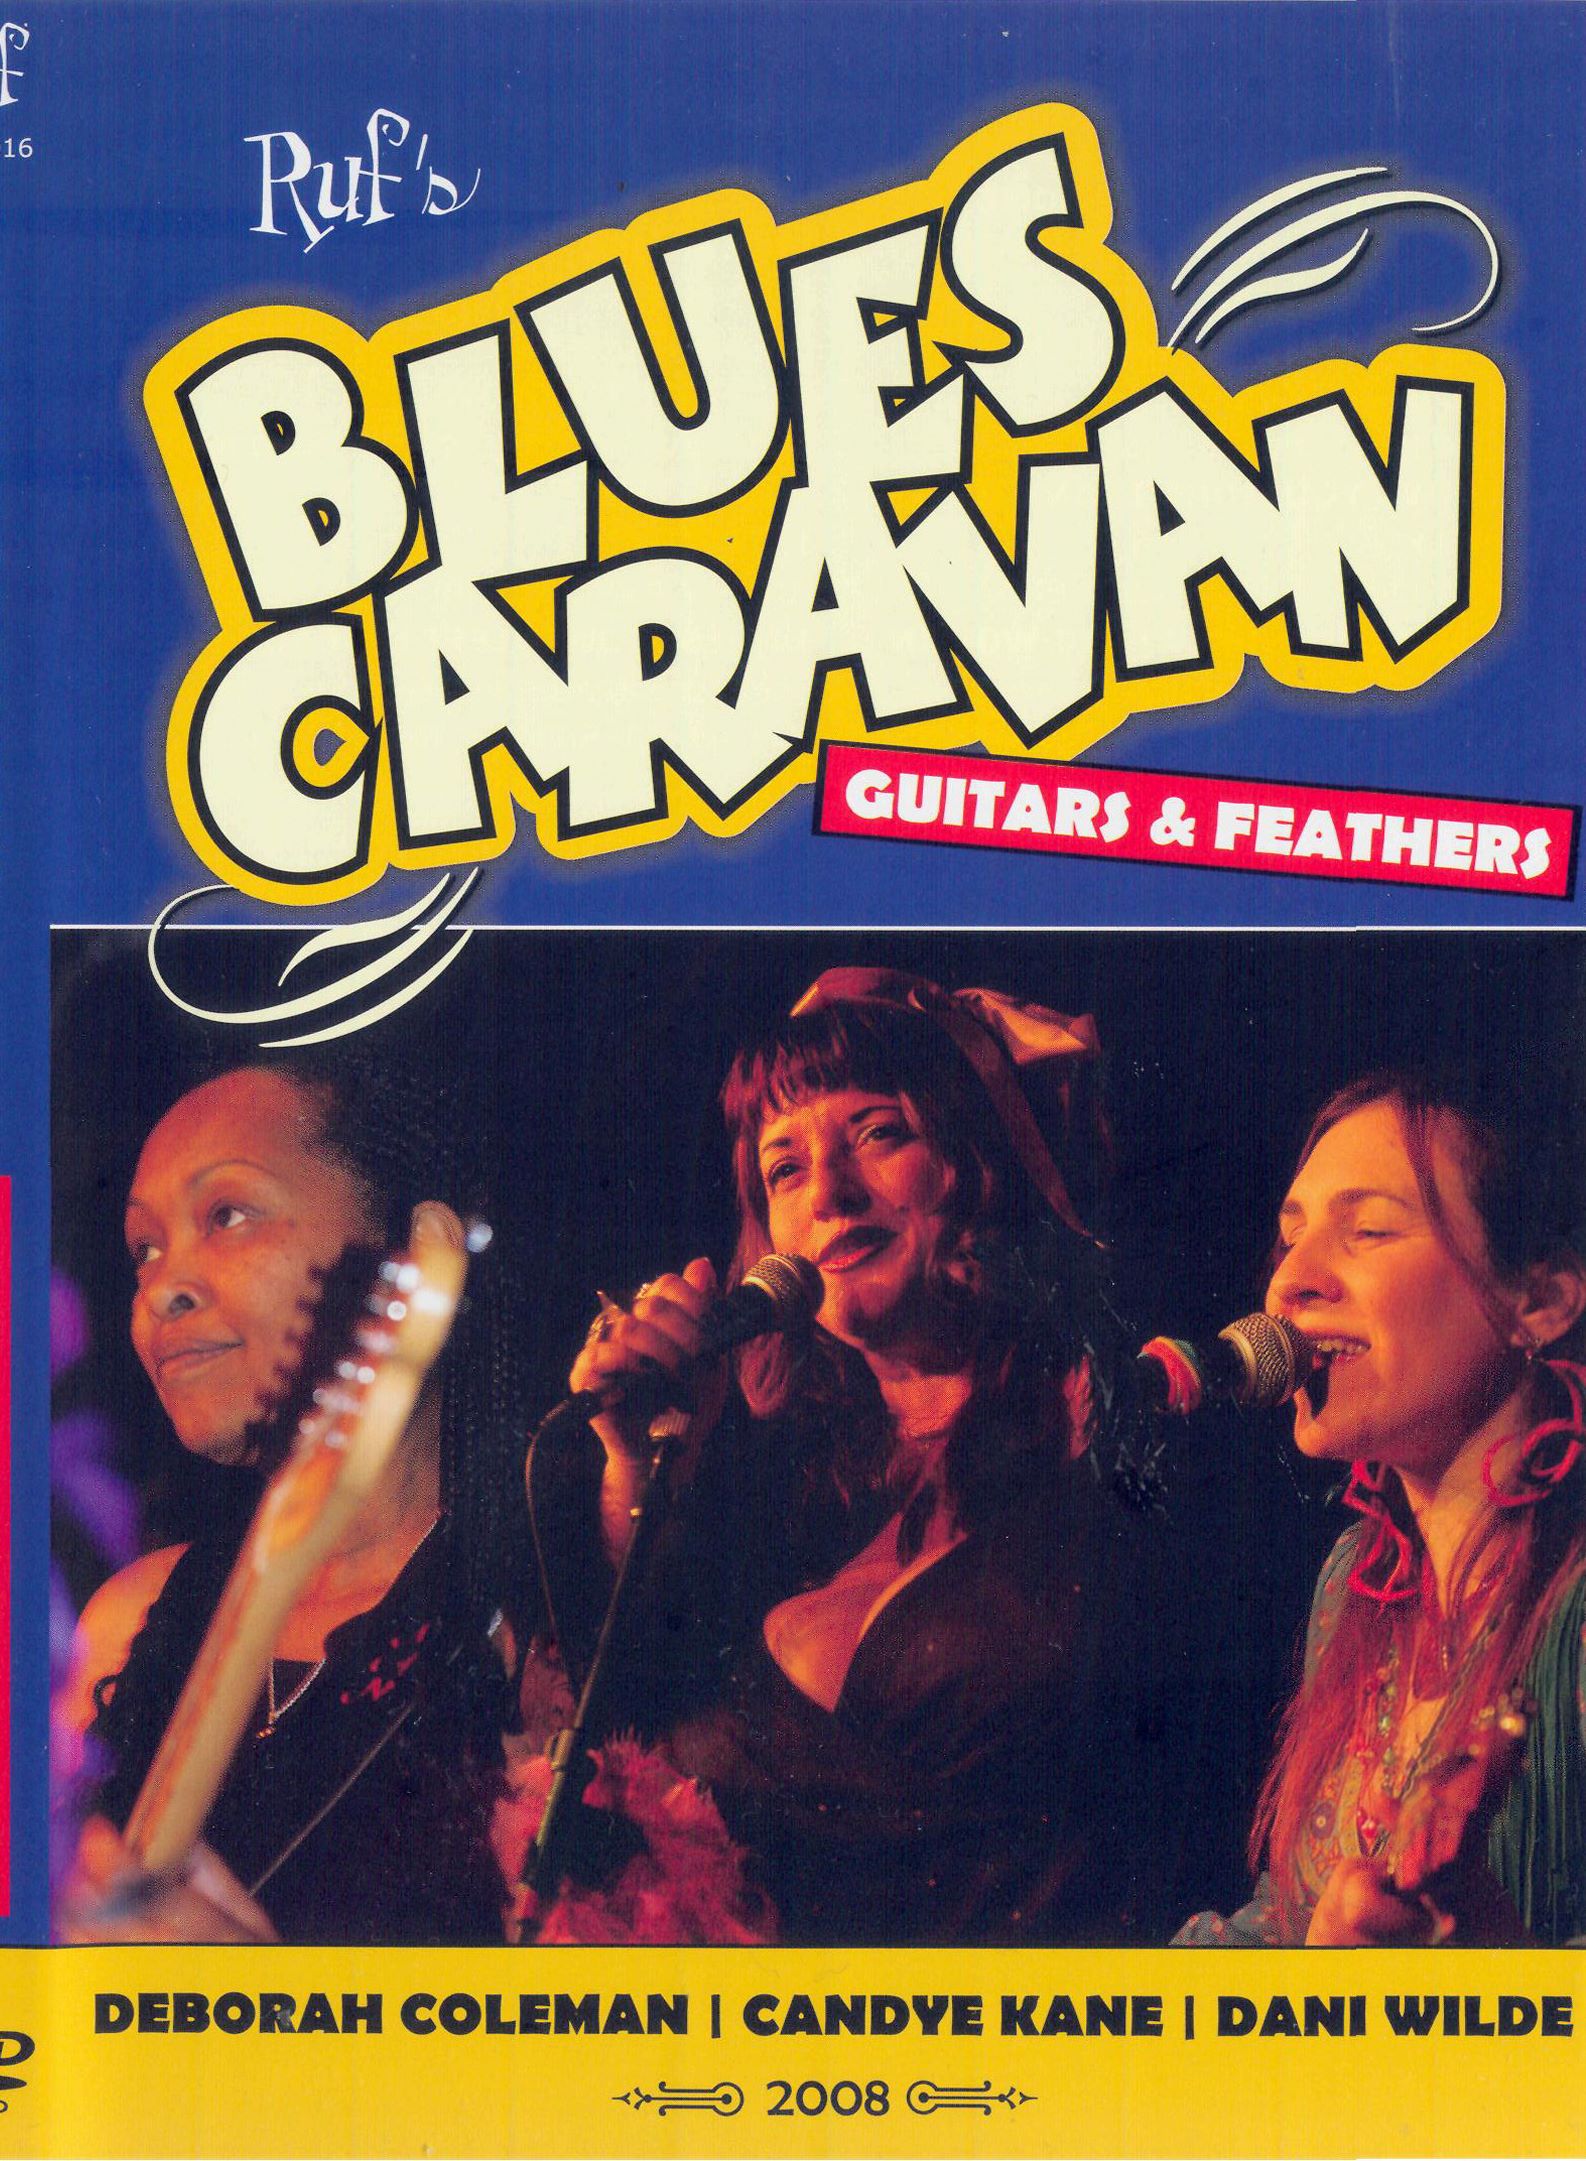 Debora Coleman, Candye Kane, Dani Wilde - Blues Caravan - Guitars & Feathers 2008 (DVD5+CD)